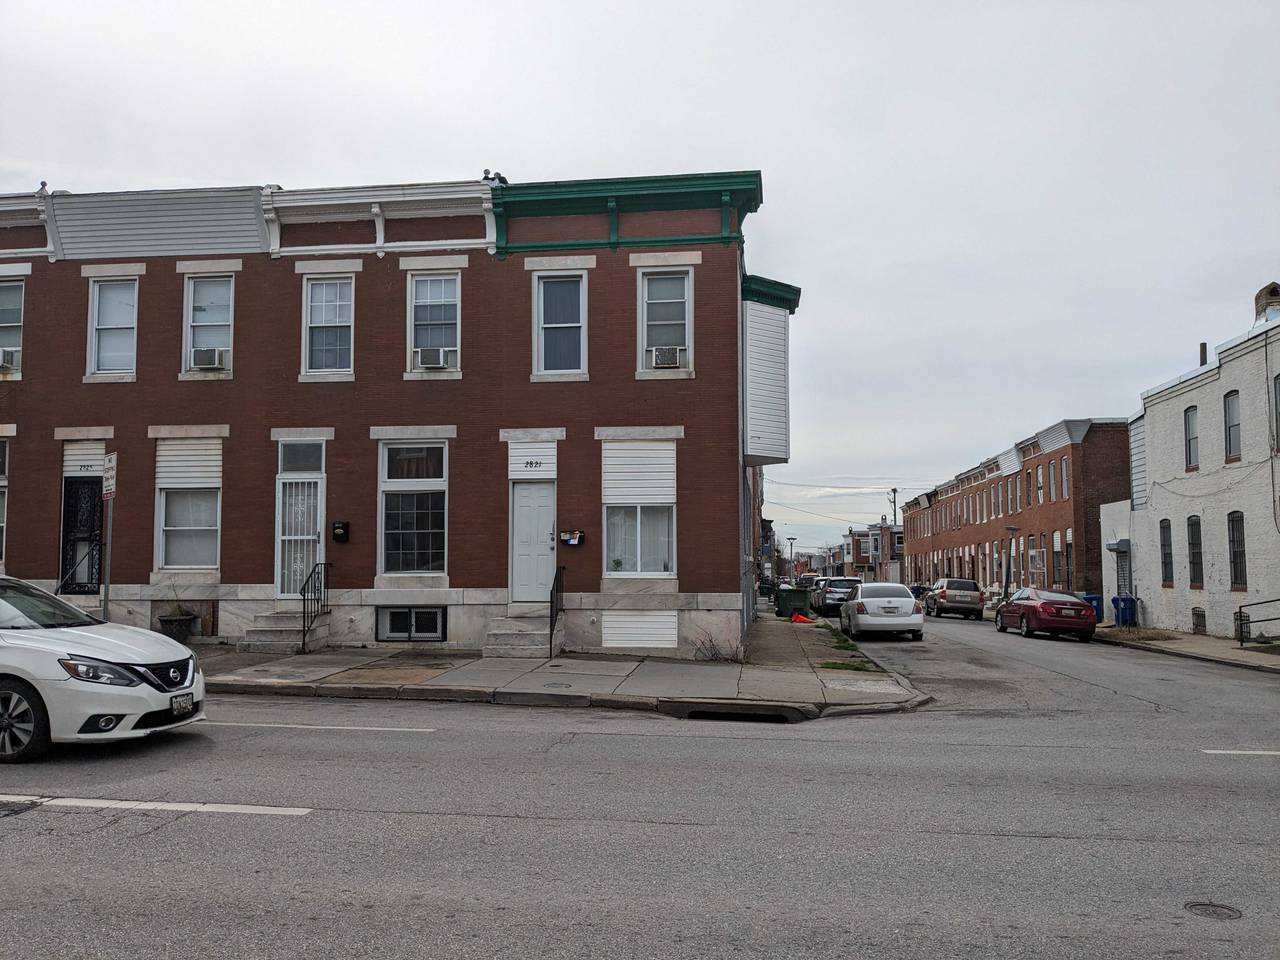 Photograph of Baltimore row houses.